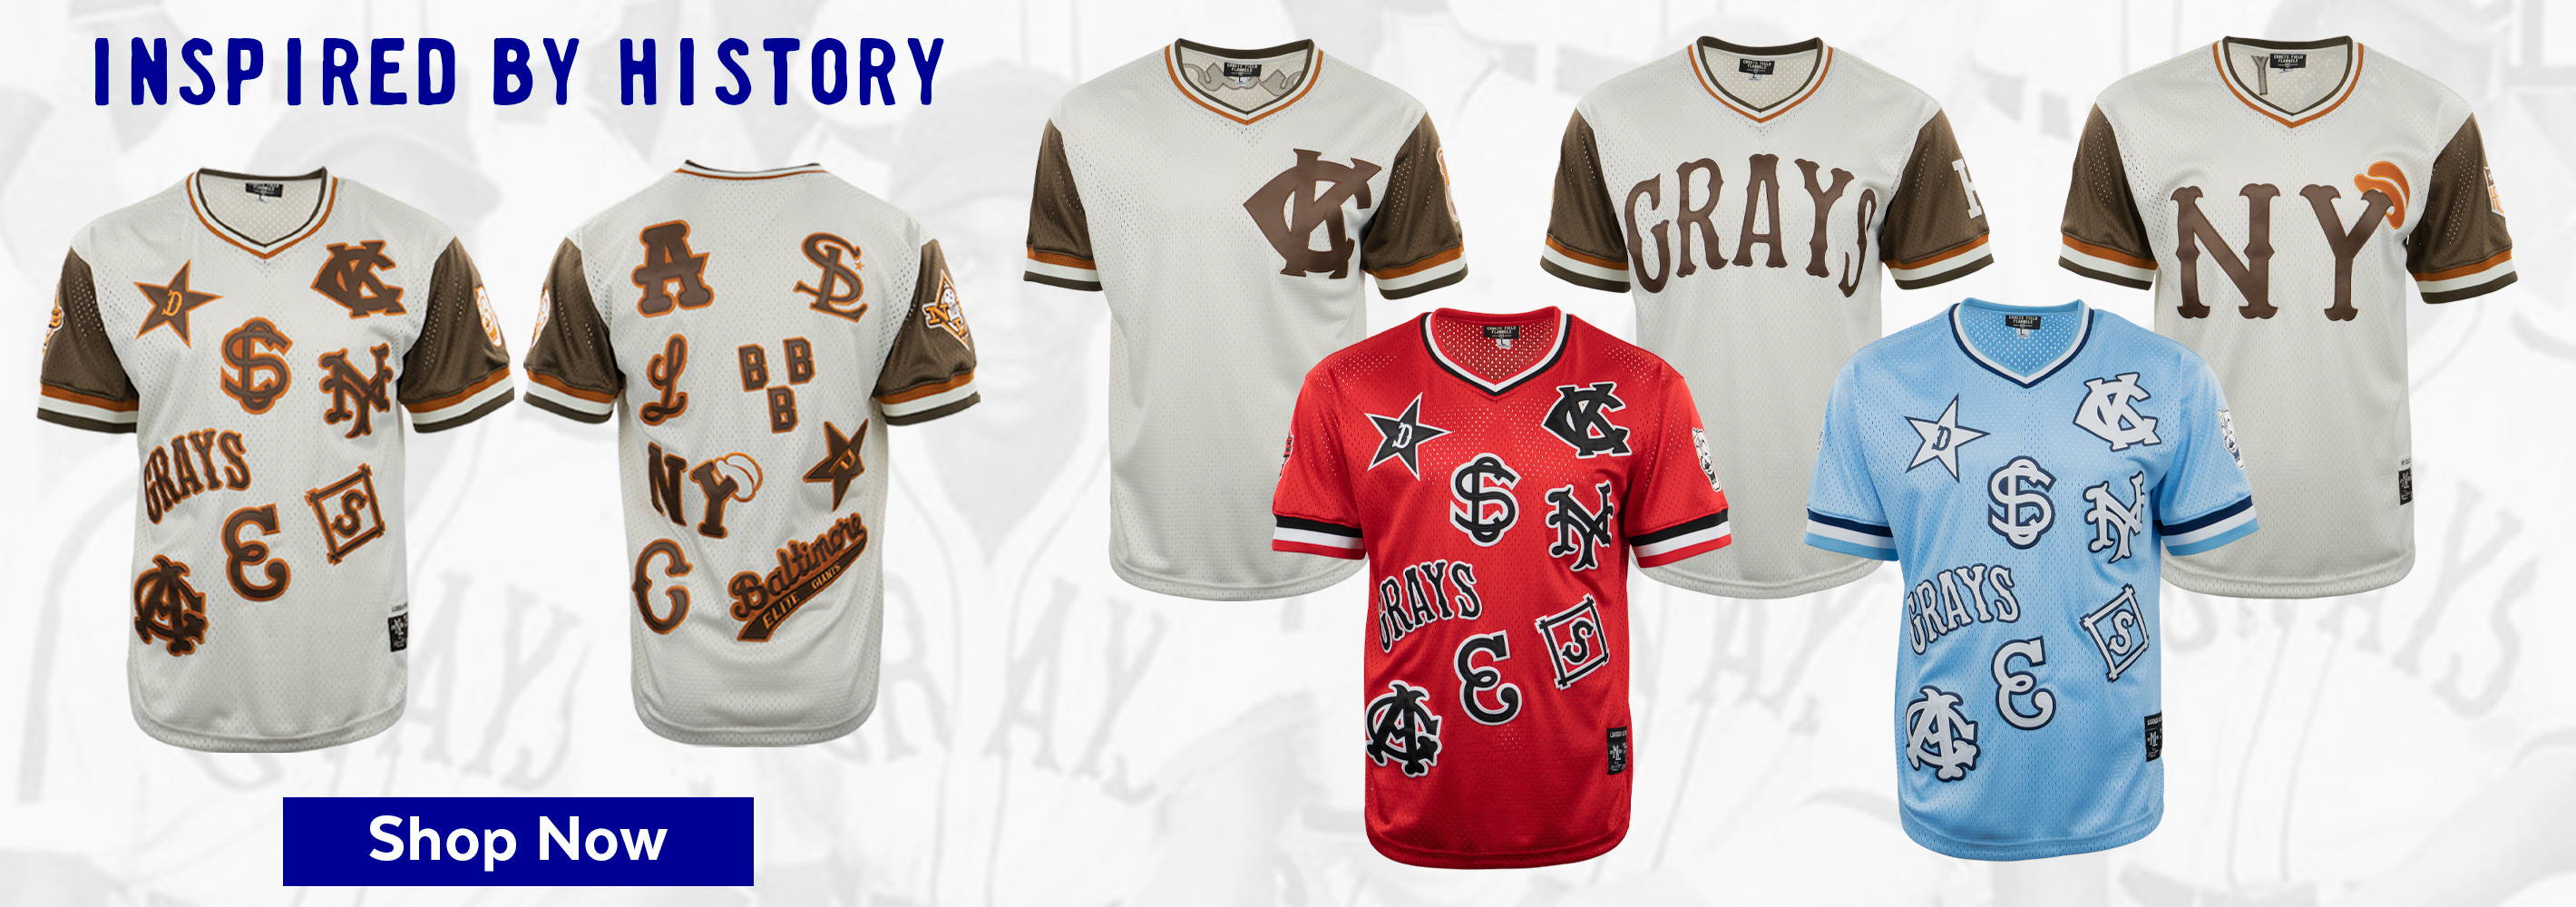 Vintage Inspired V-Neck Mesh Jerseys. [Negro League Baseball] [Homestead Grays]  [Kansas City Monarchs] [New York Black Yankees] [Mesh V-Neck Jersey] [Streetwear] [Style] [Men's Fashion] [Menswear]